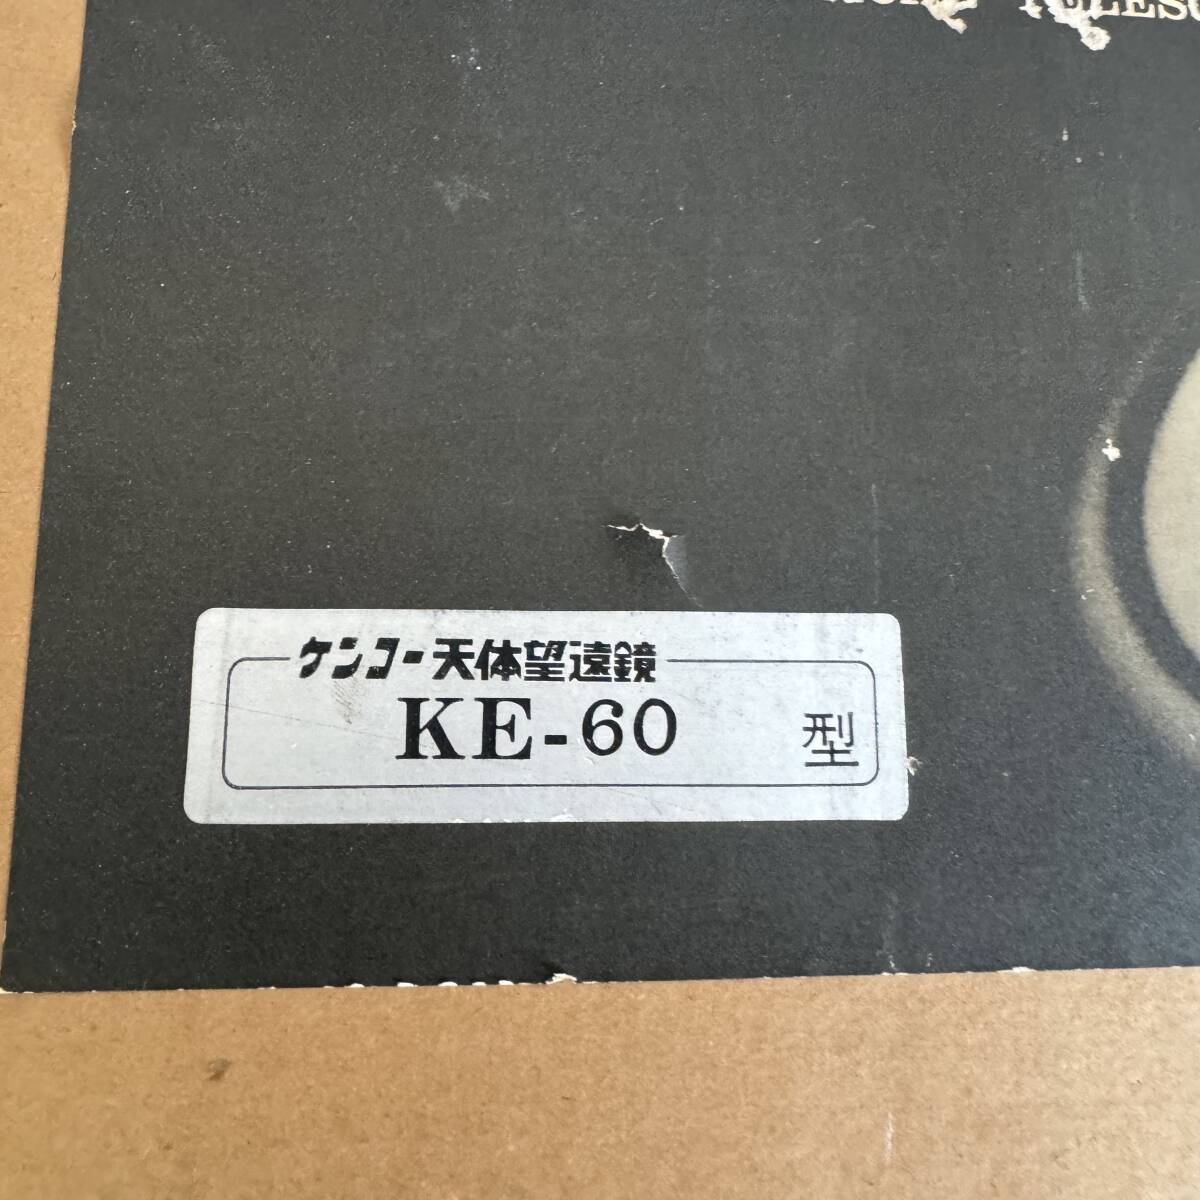 * Gifu departure ^ KENKO / Kenko ^ KE-60 / heaven body telescope / heaven body ../ lens not yet verification / present condition goods R6.5/16*